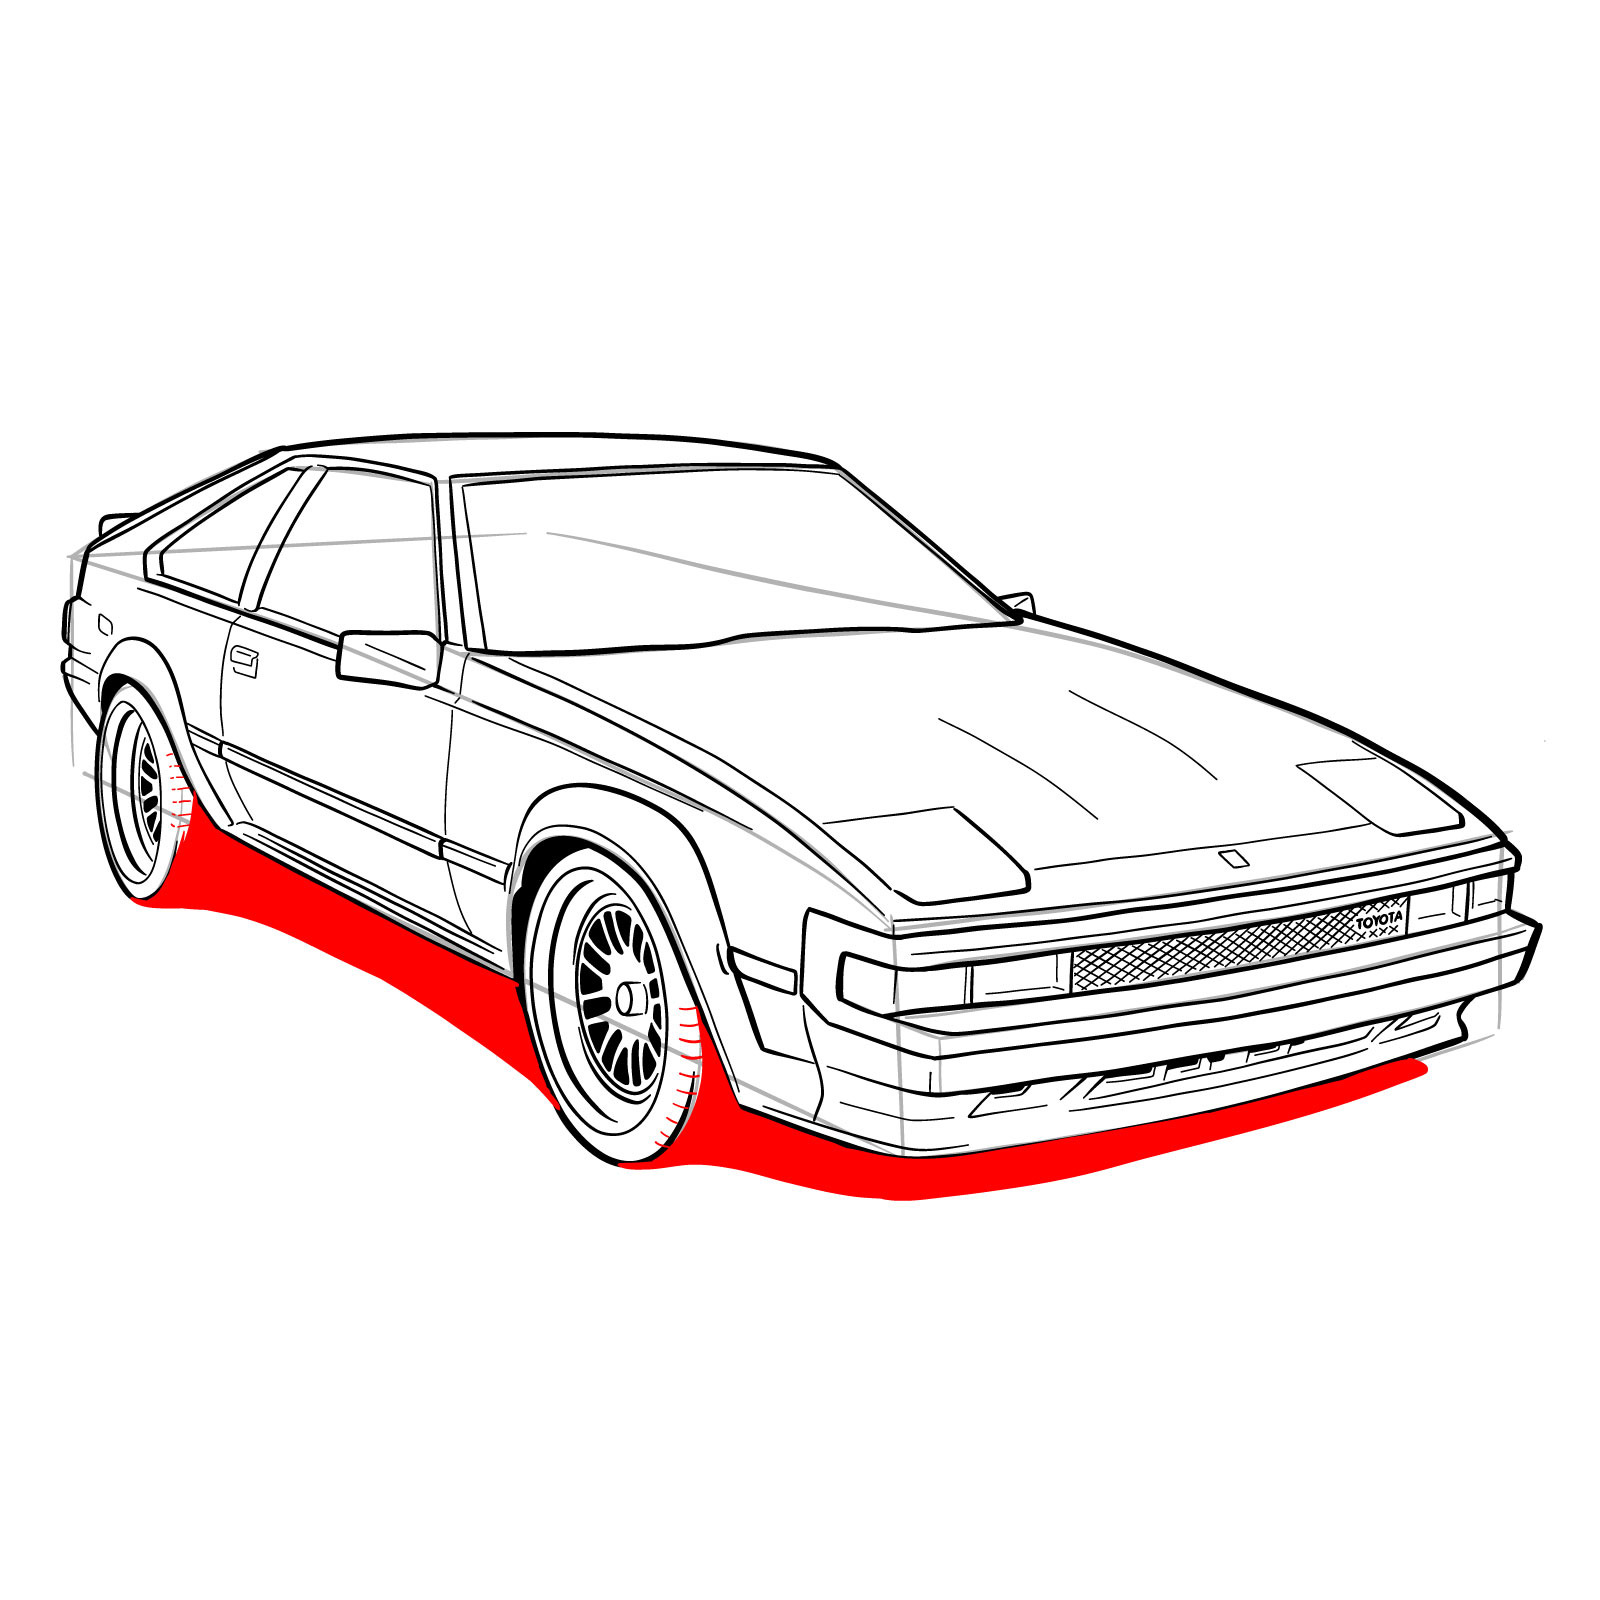 How to draw a 1985 Toyota Celica Supra P Type MK 2 - step 38